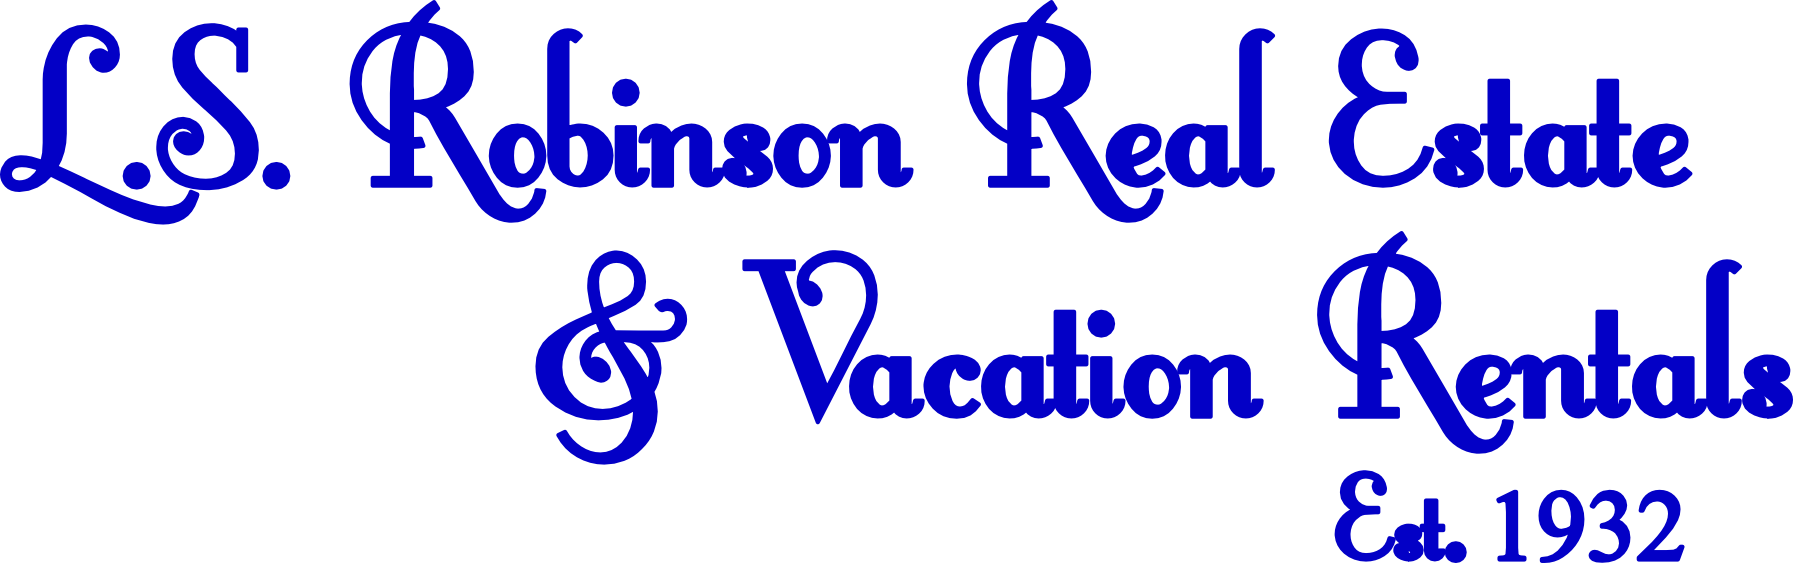 L.S. Robinson Real Estate & Vacation Rentals